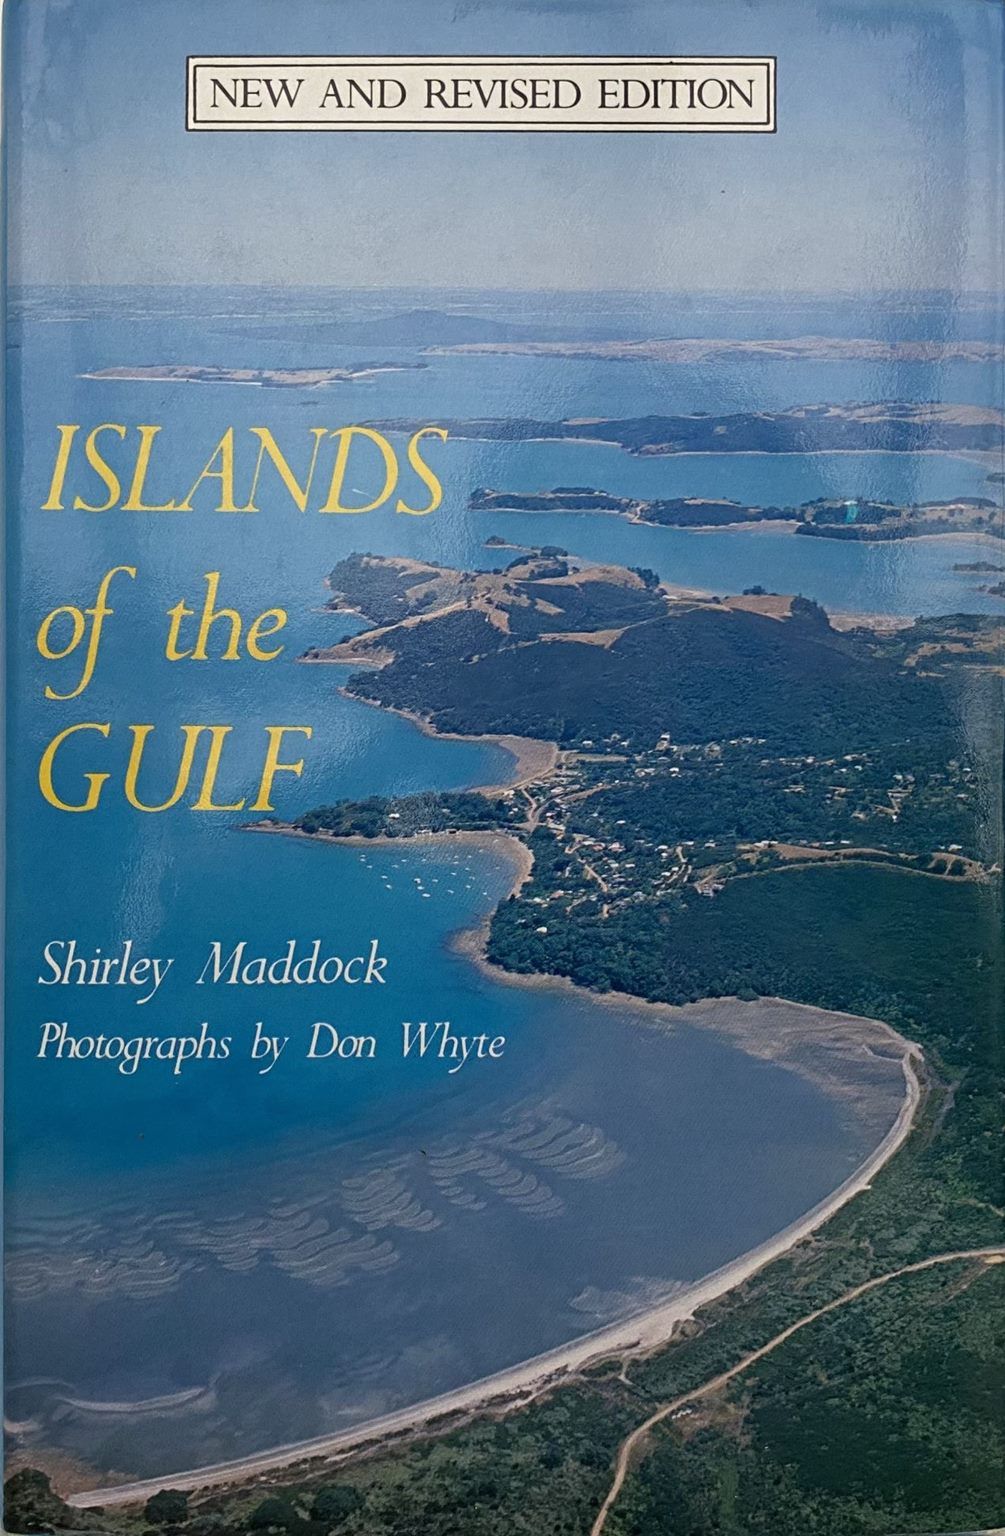 ISLANDS OF THE GULF